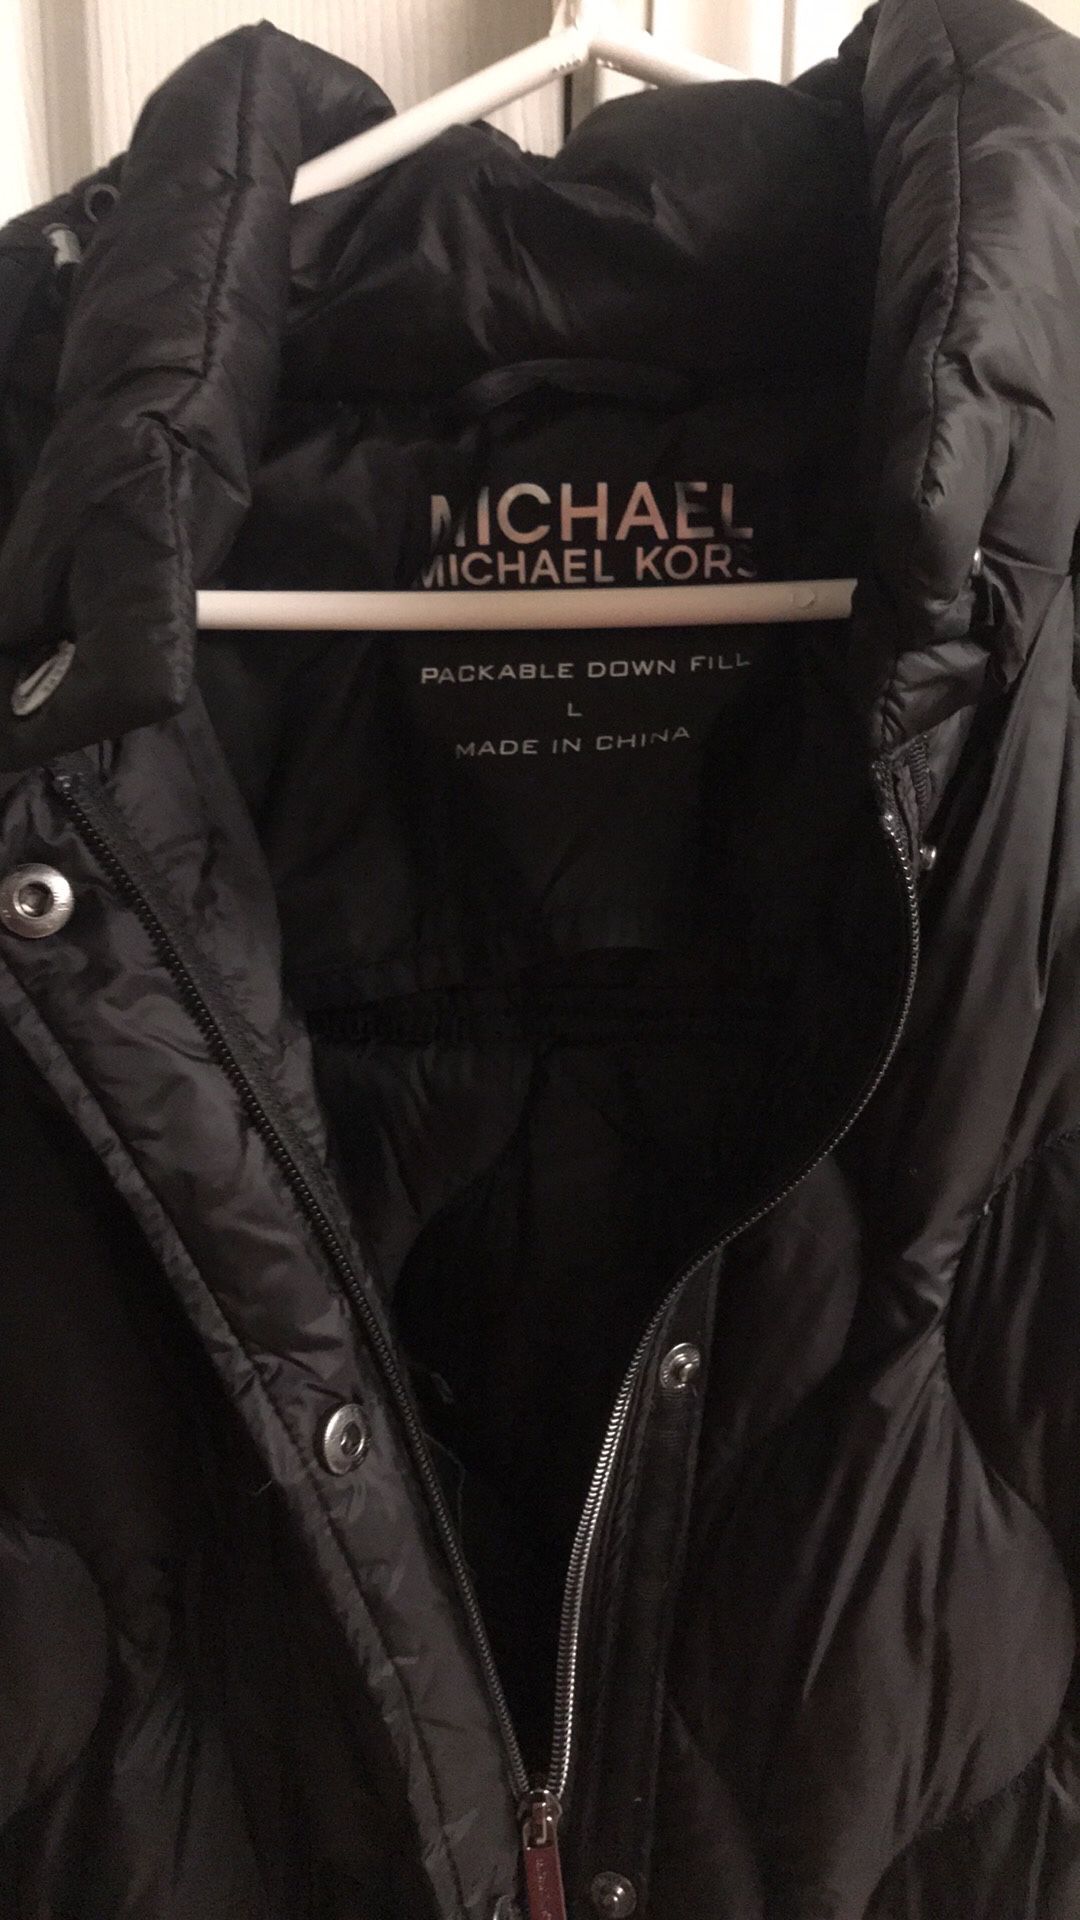 Michael Kors jacket